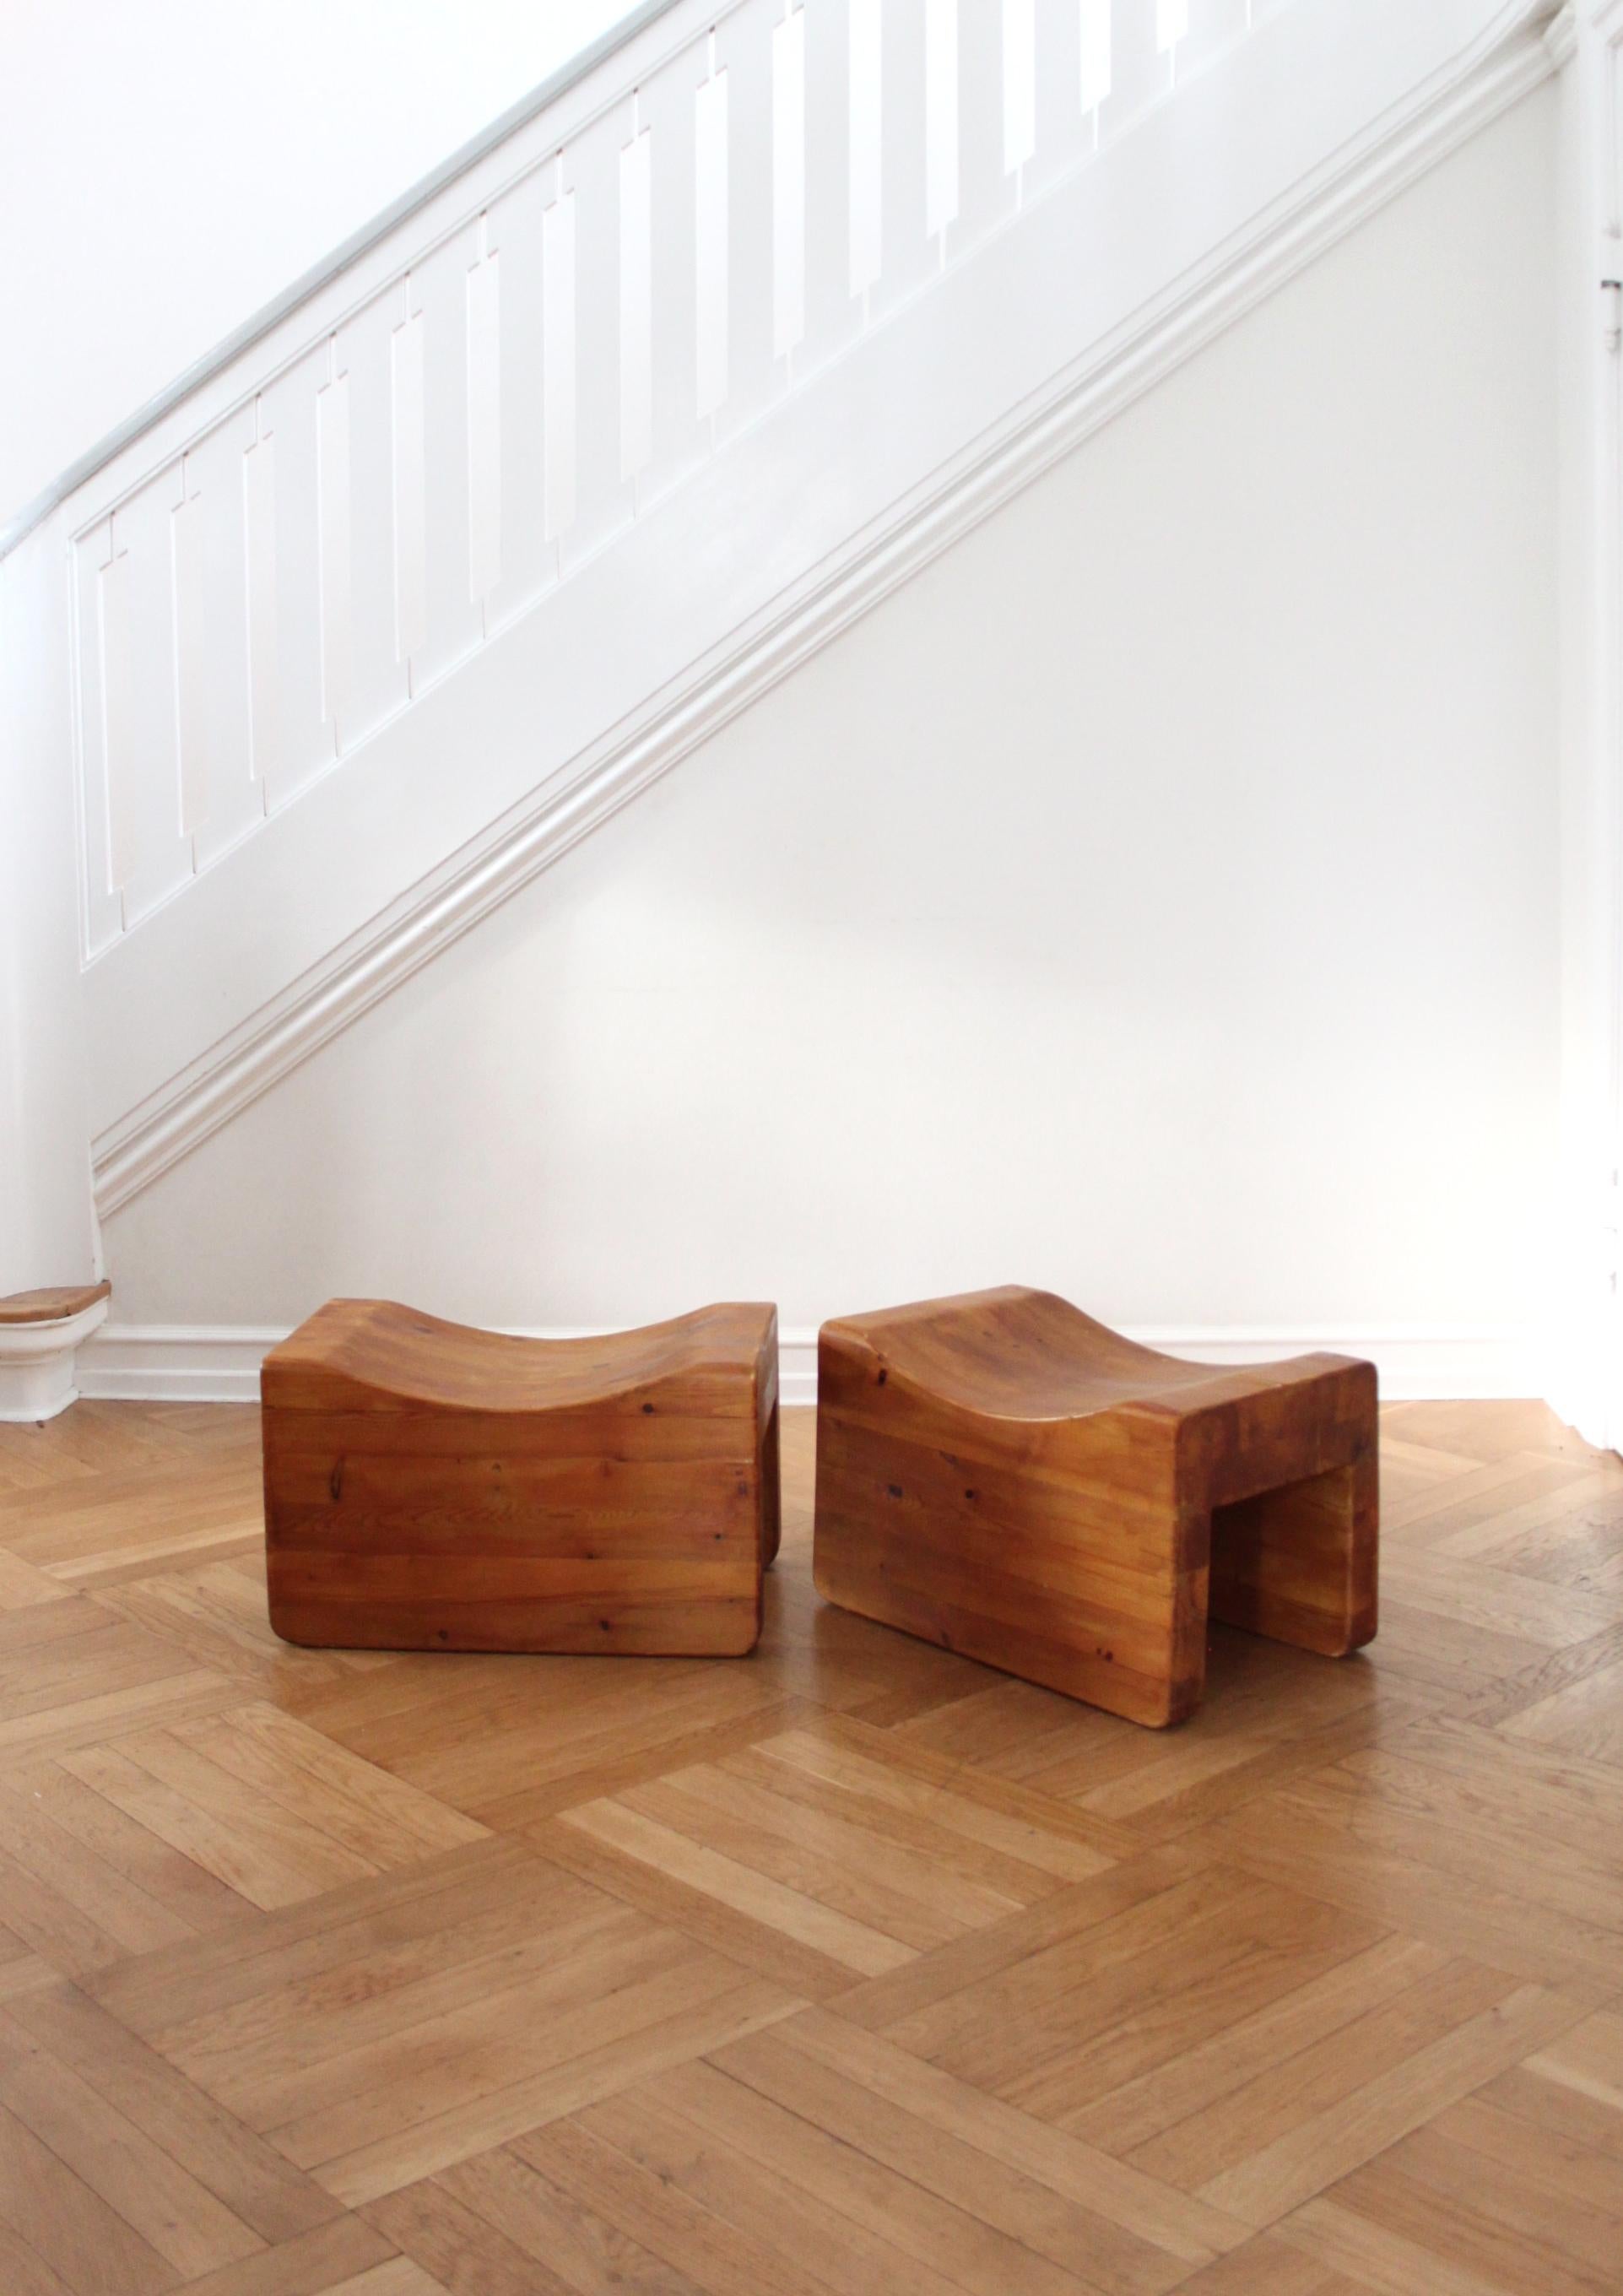 K.J. Petterson & Söner, Pair of Stools in Pine, Scandinavian Modern Design 1